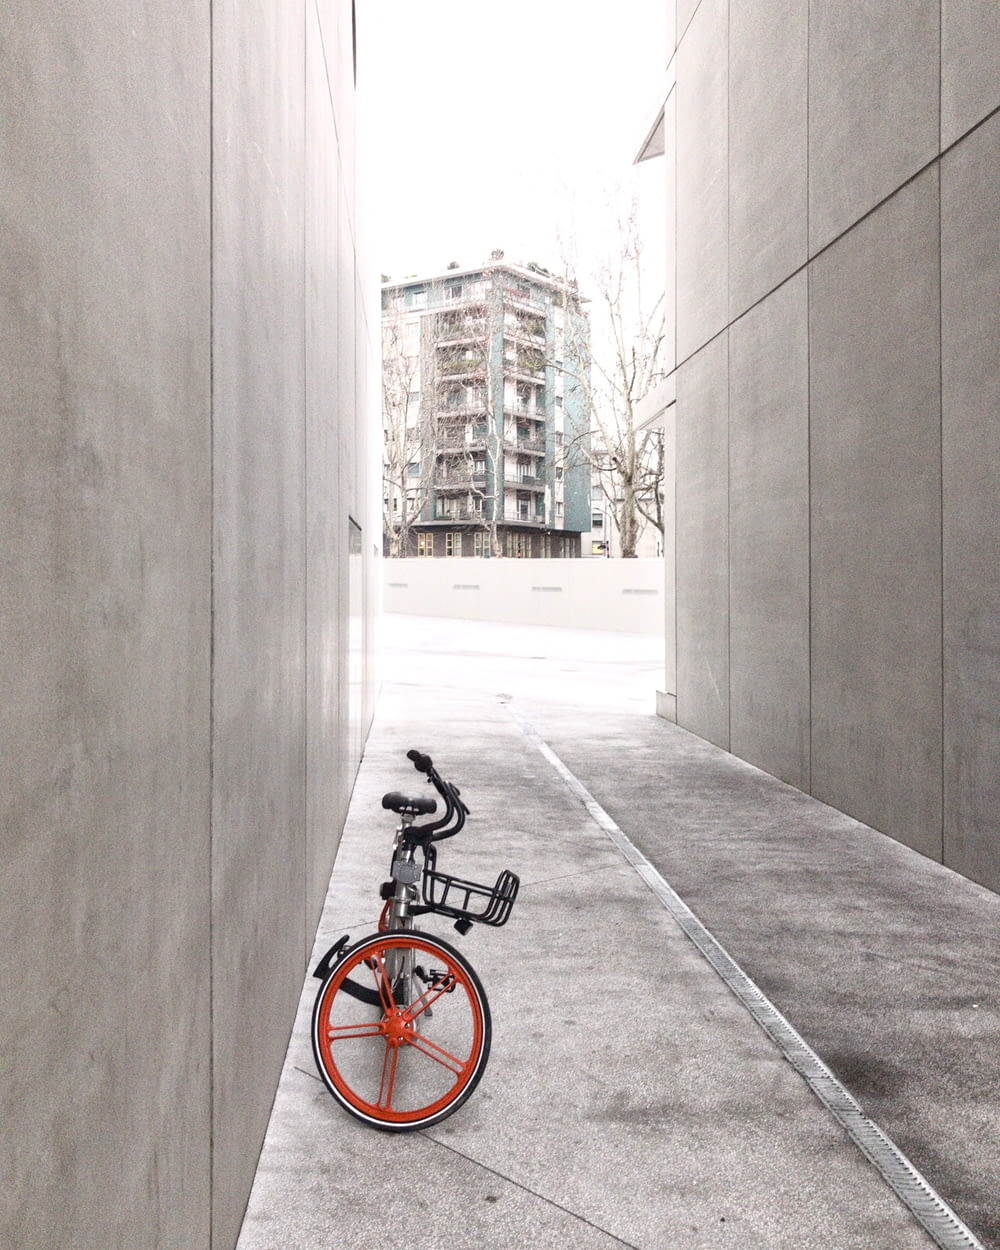 black and orange bicycle in between concrete walls